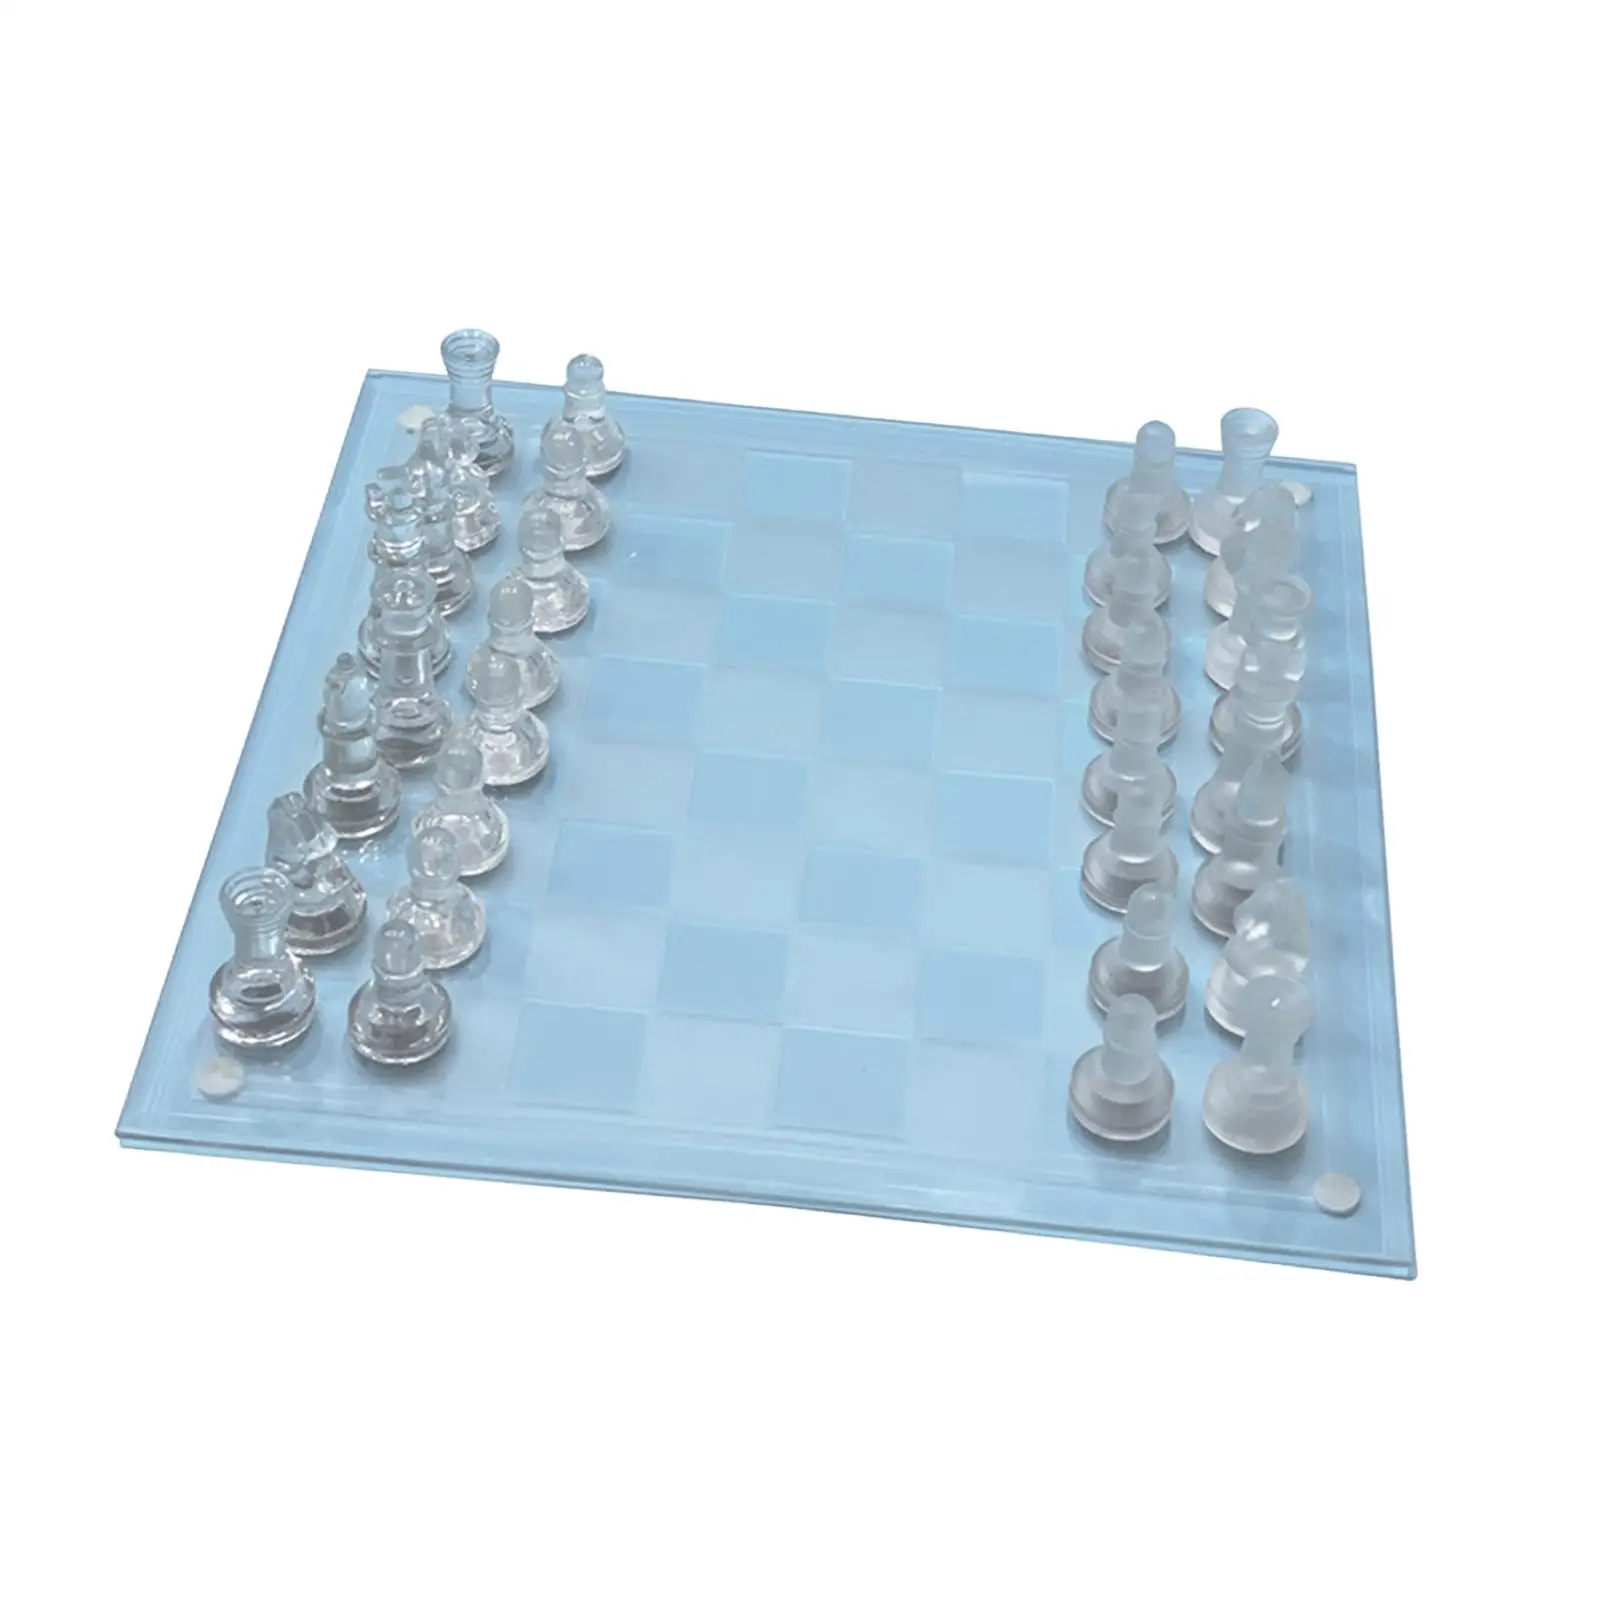 Tábua de xadrez de vidro internacional com conjunto de peças de xadrez,  conjunto de cristal - AliExpress